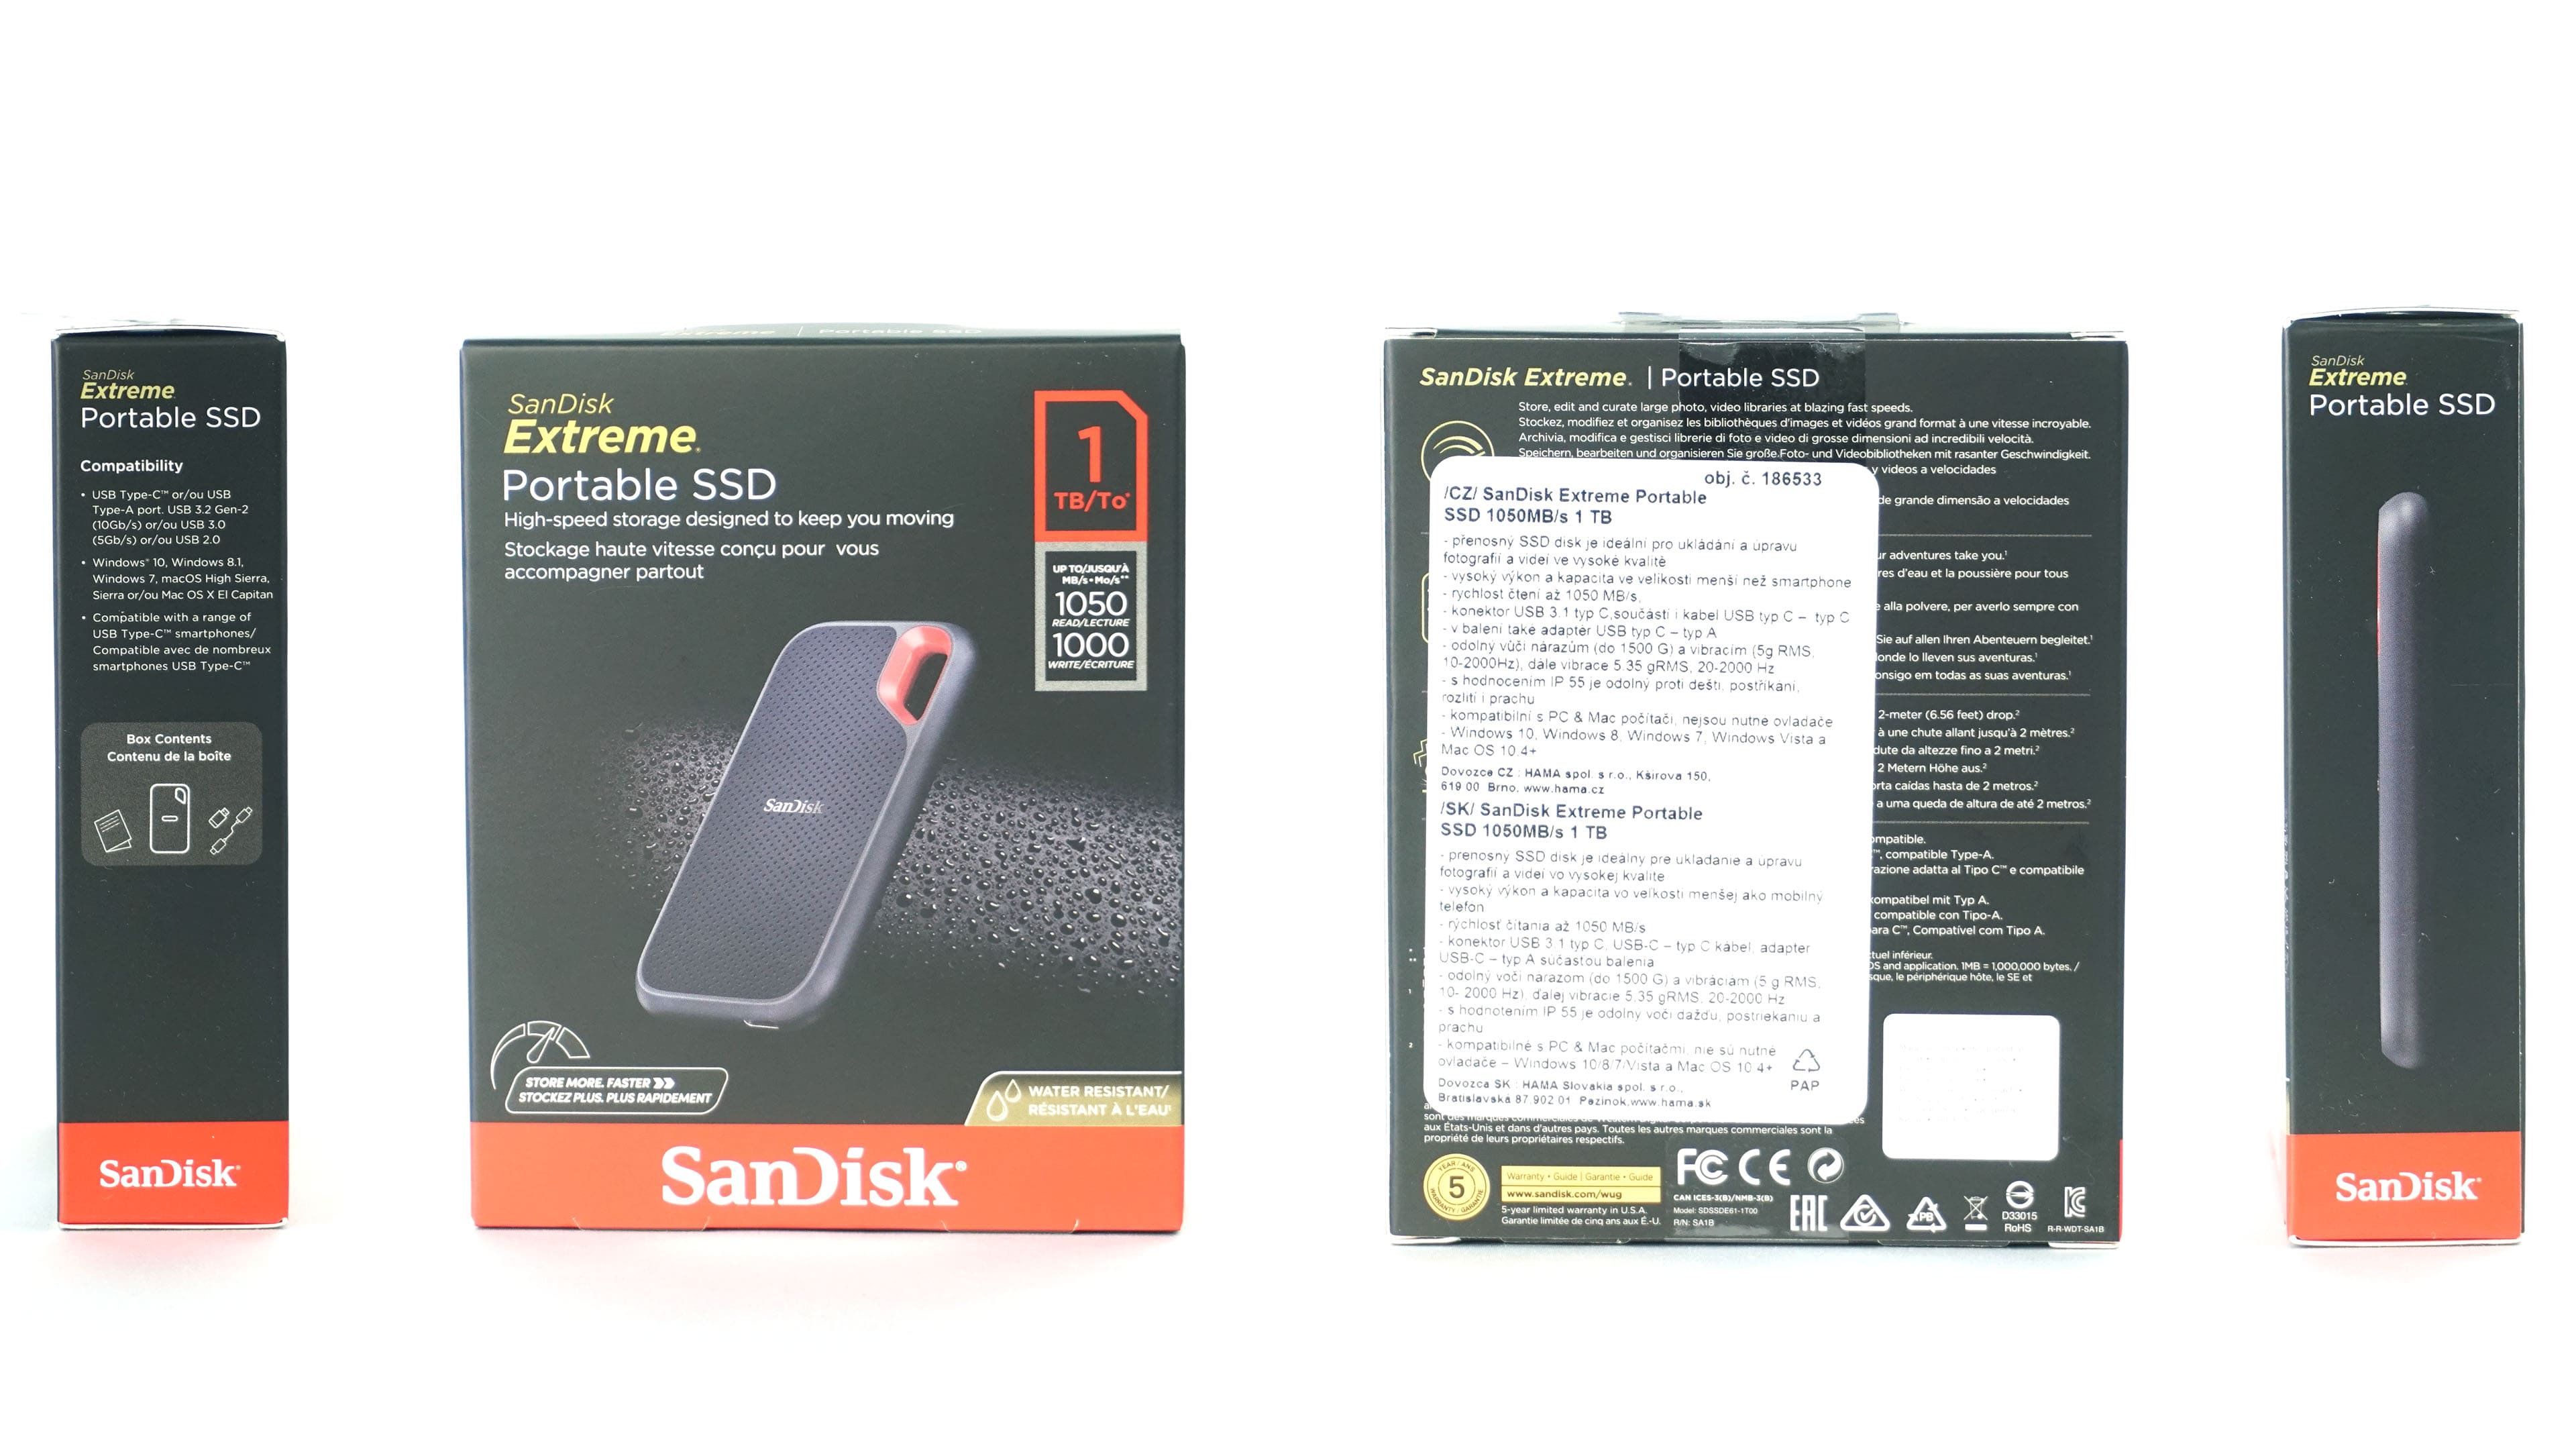 SanDisk Extreme Portable SSD V2: higher performance, new body 